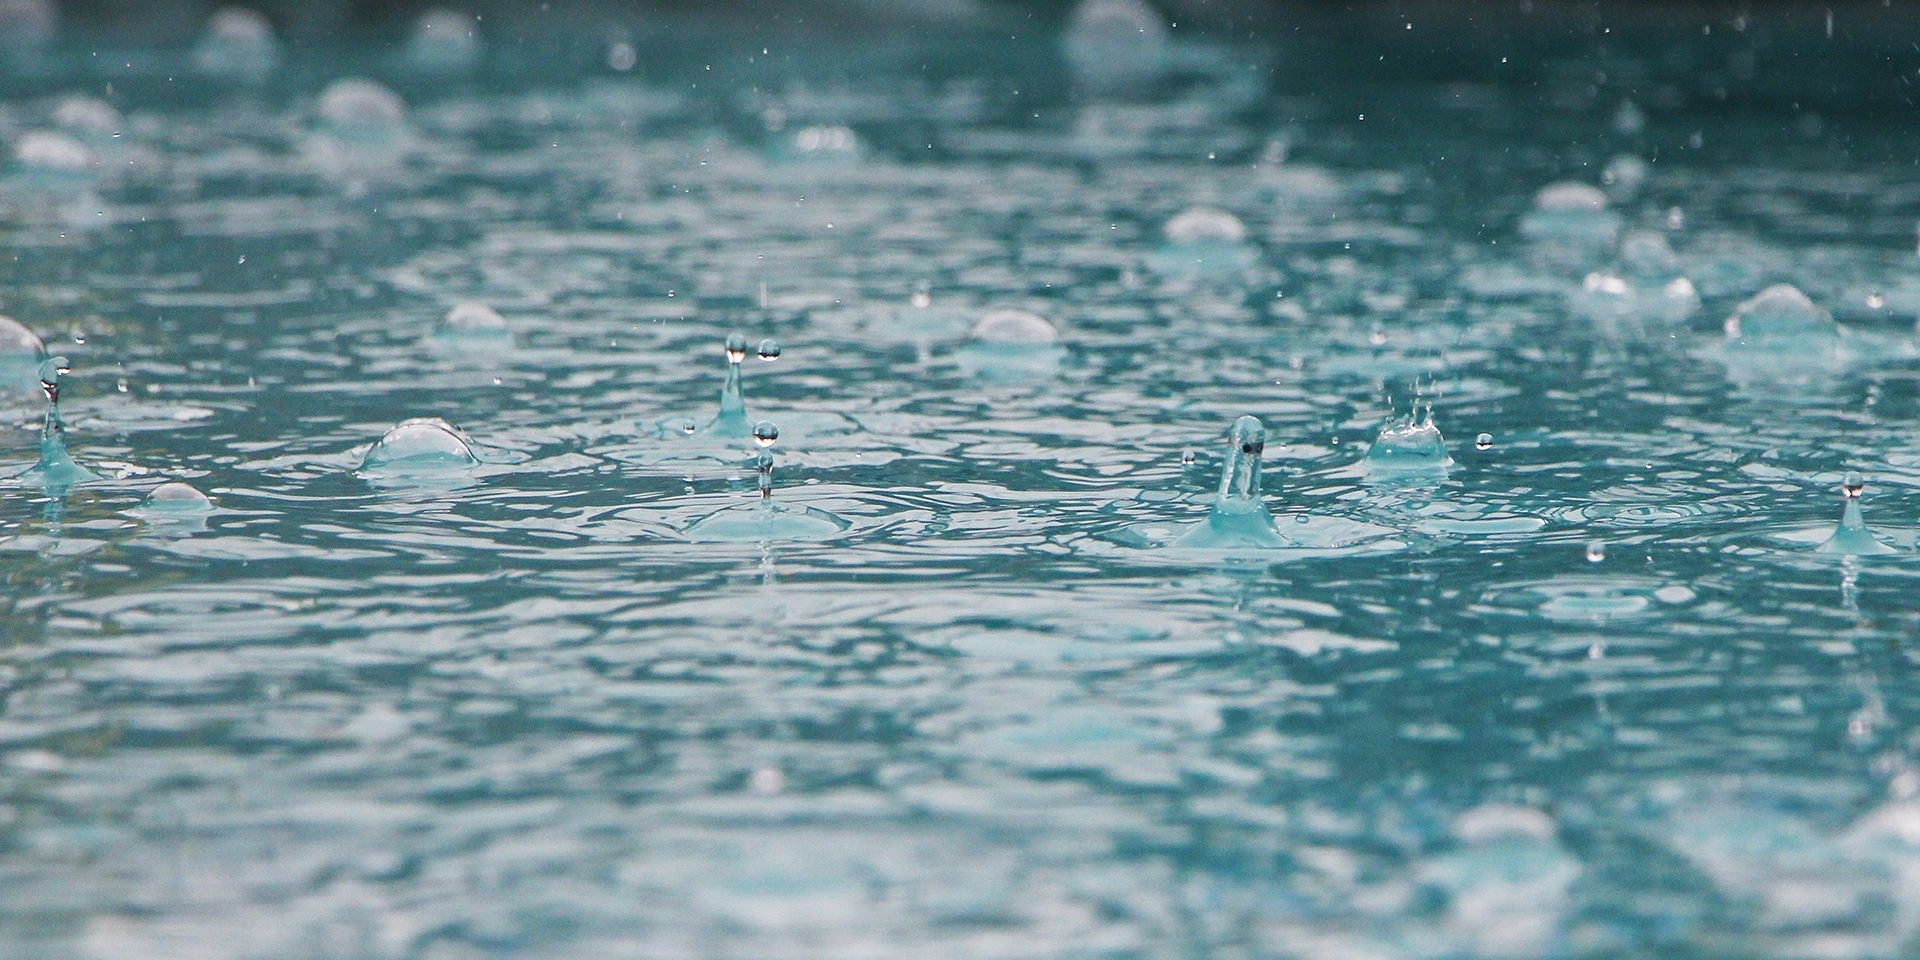 rain-falling-into-water